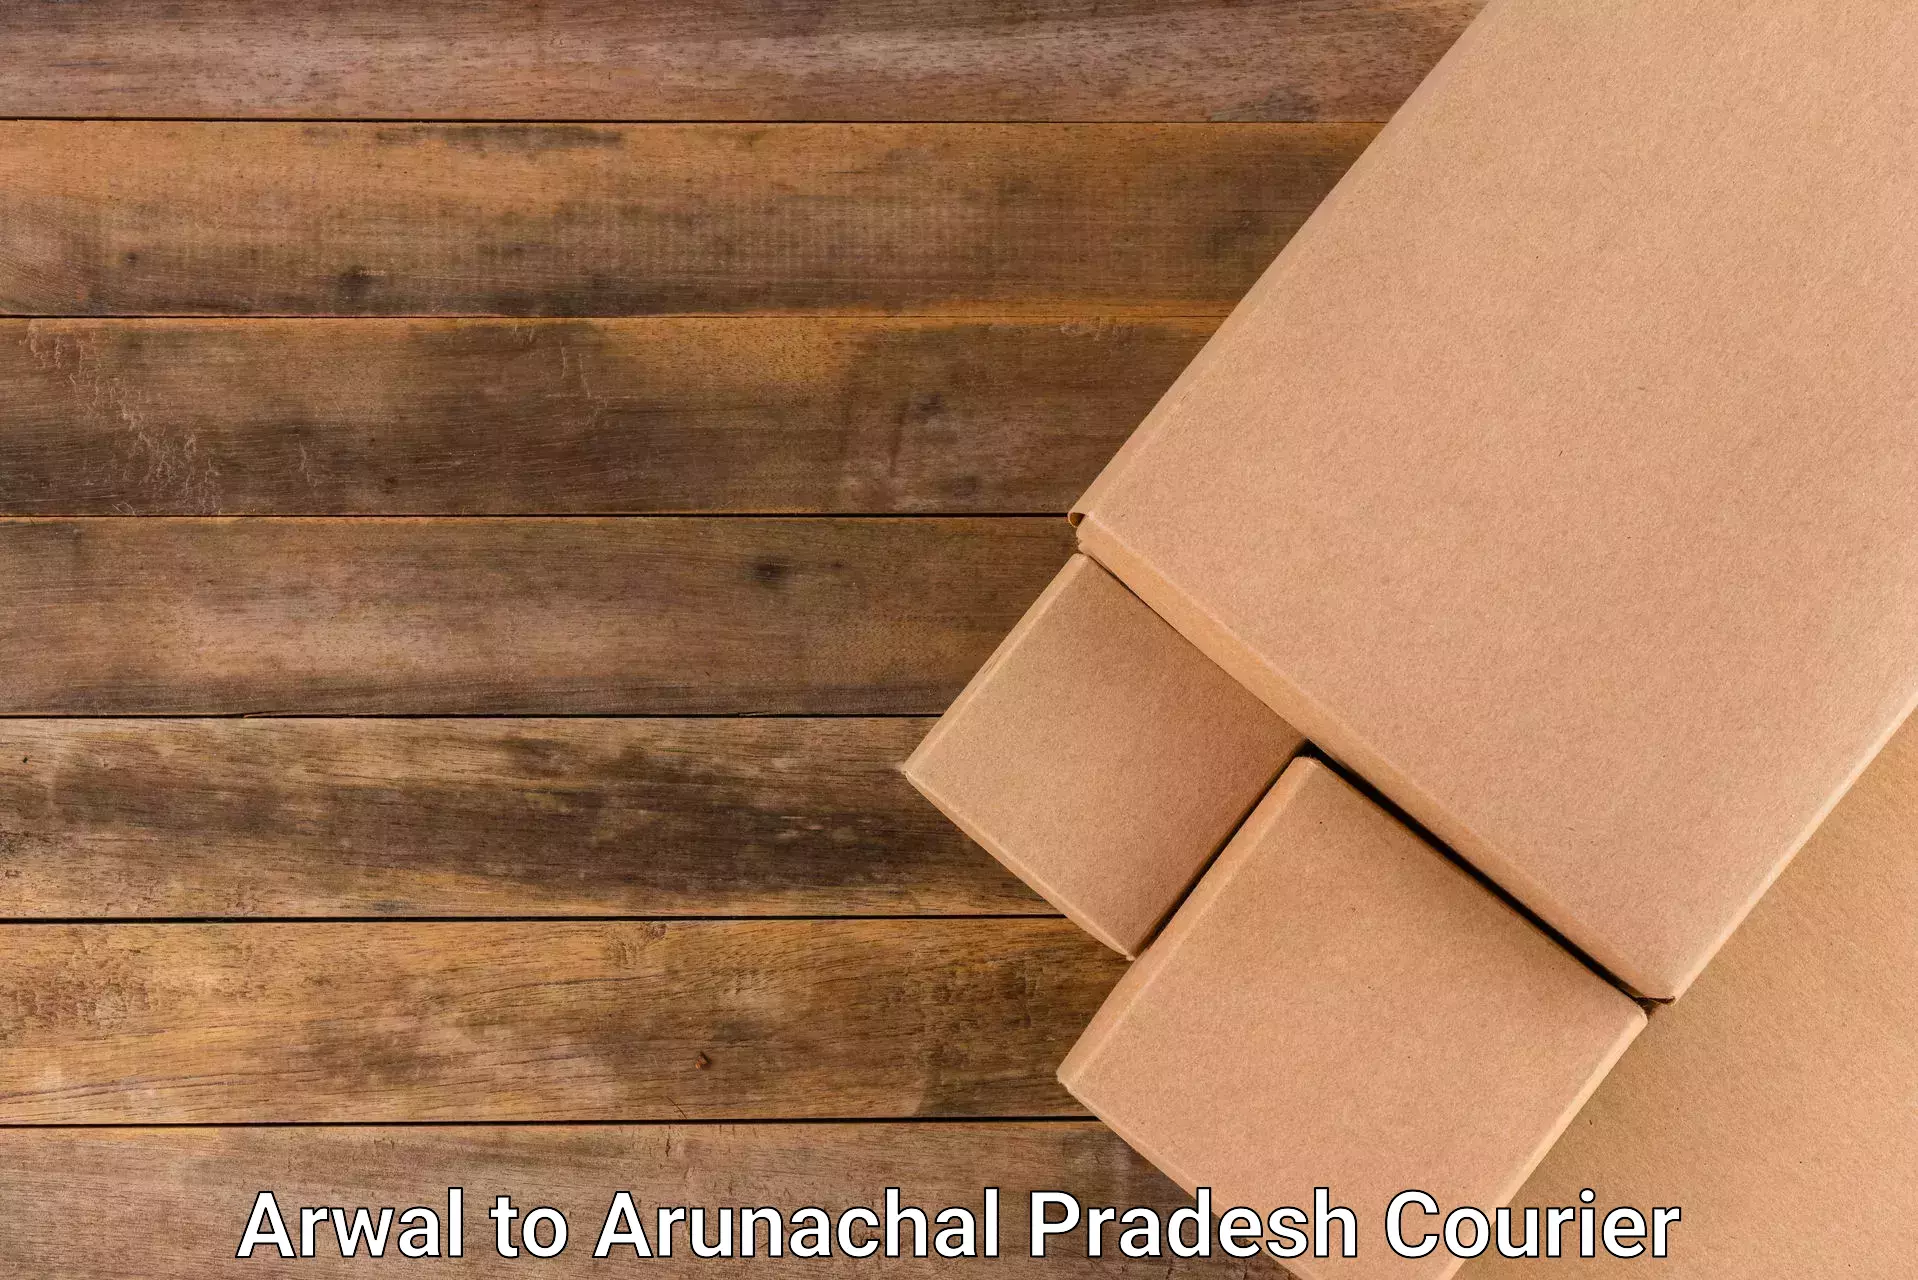 High value parcel delivery in Arwal to Arunachal Pradesh